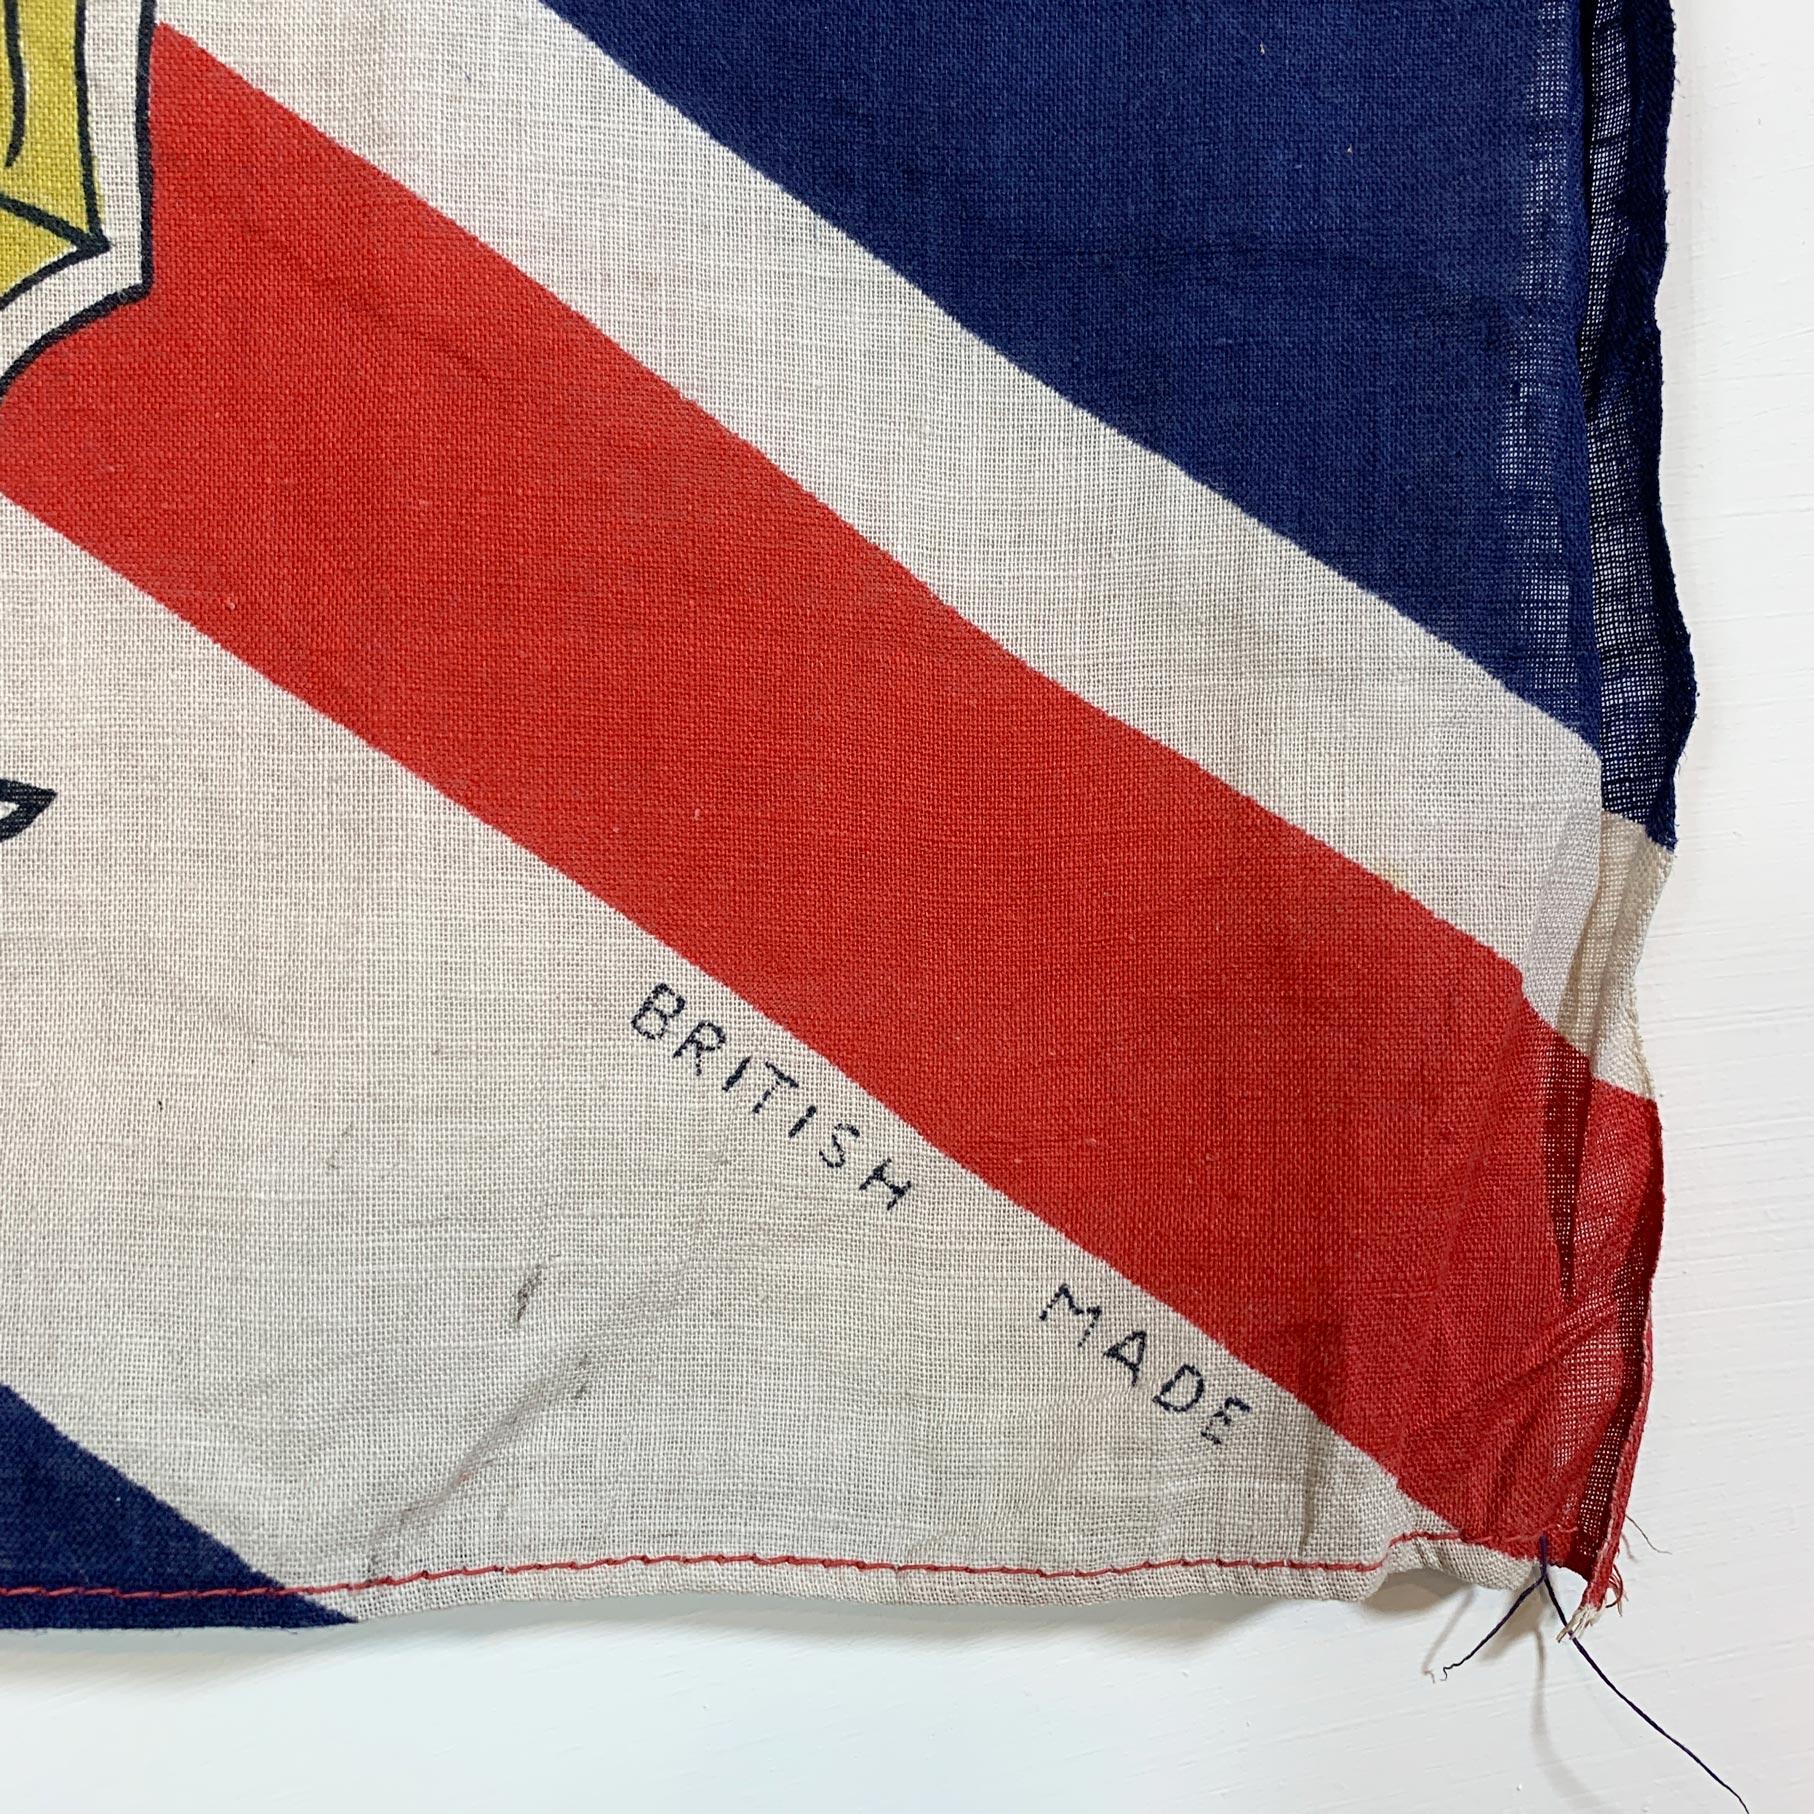 Queen Elizabeth II 1953 Royal Coronation Flag 3